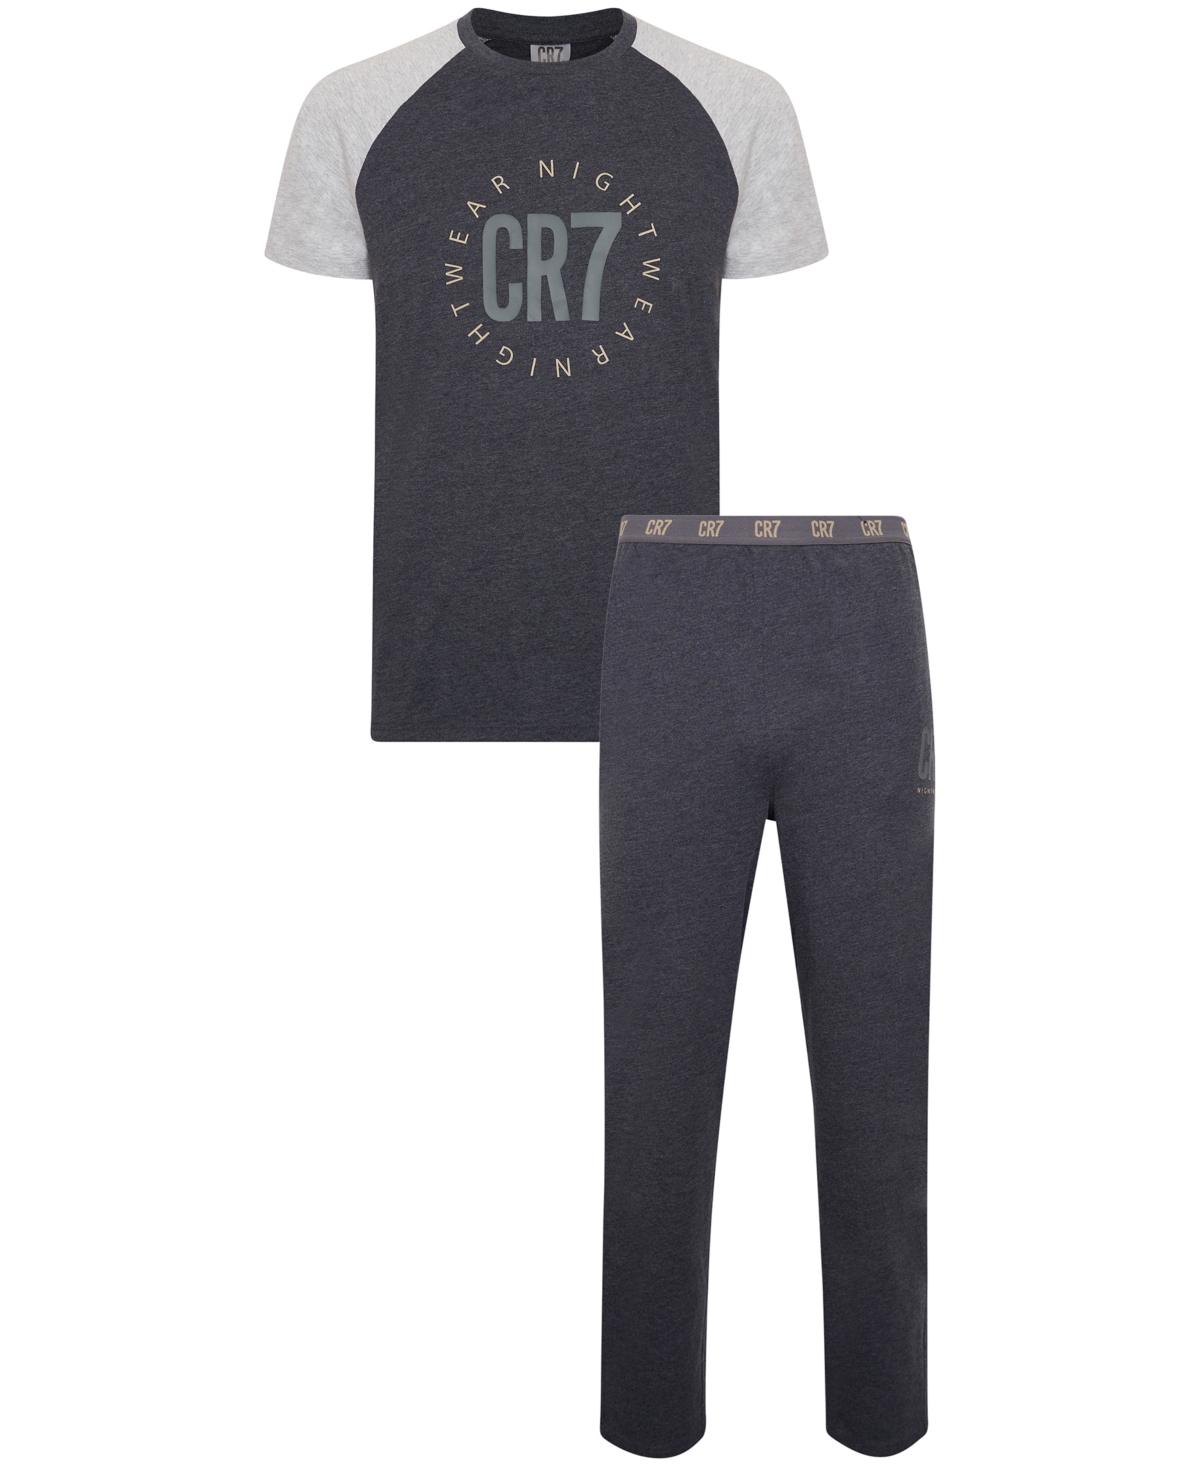 Men's 100% Cotton Loungewear Pants Set - Light Gray, Dark Gray